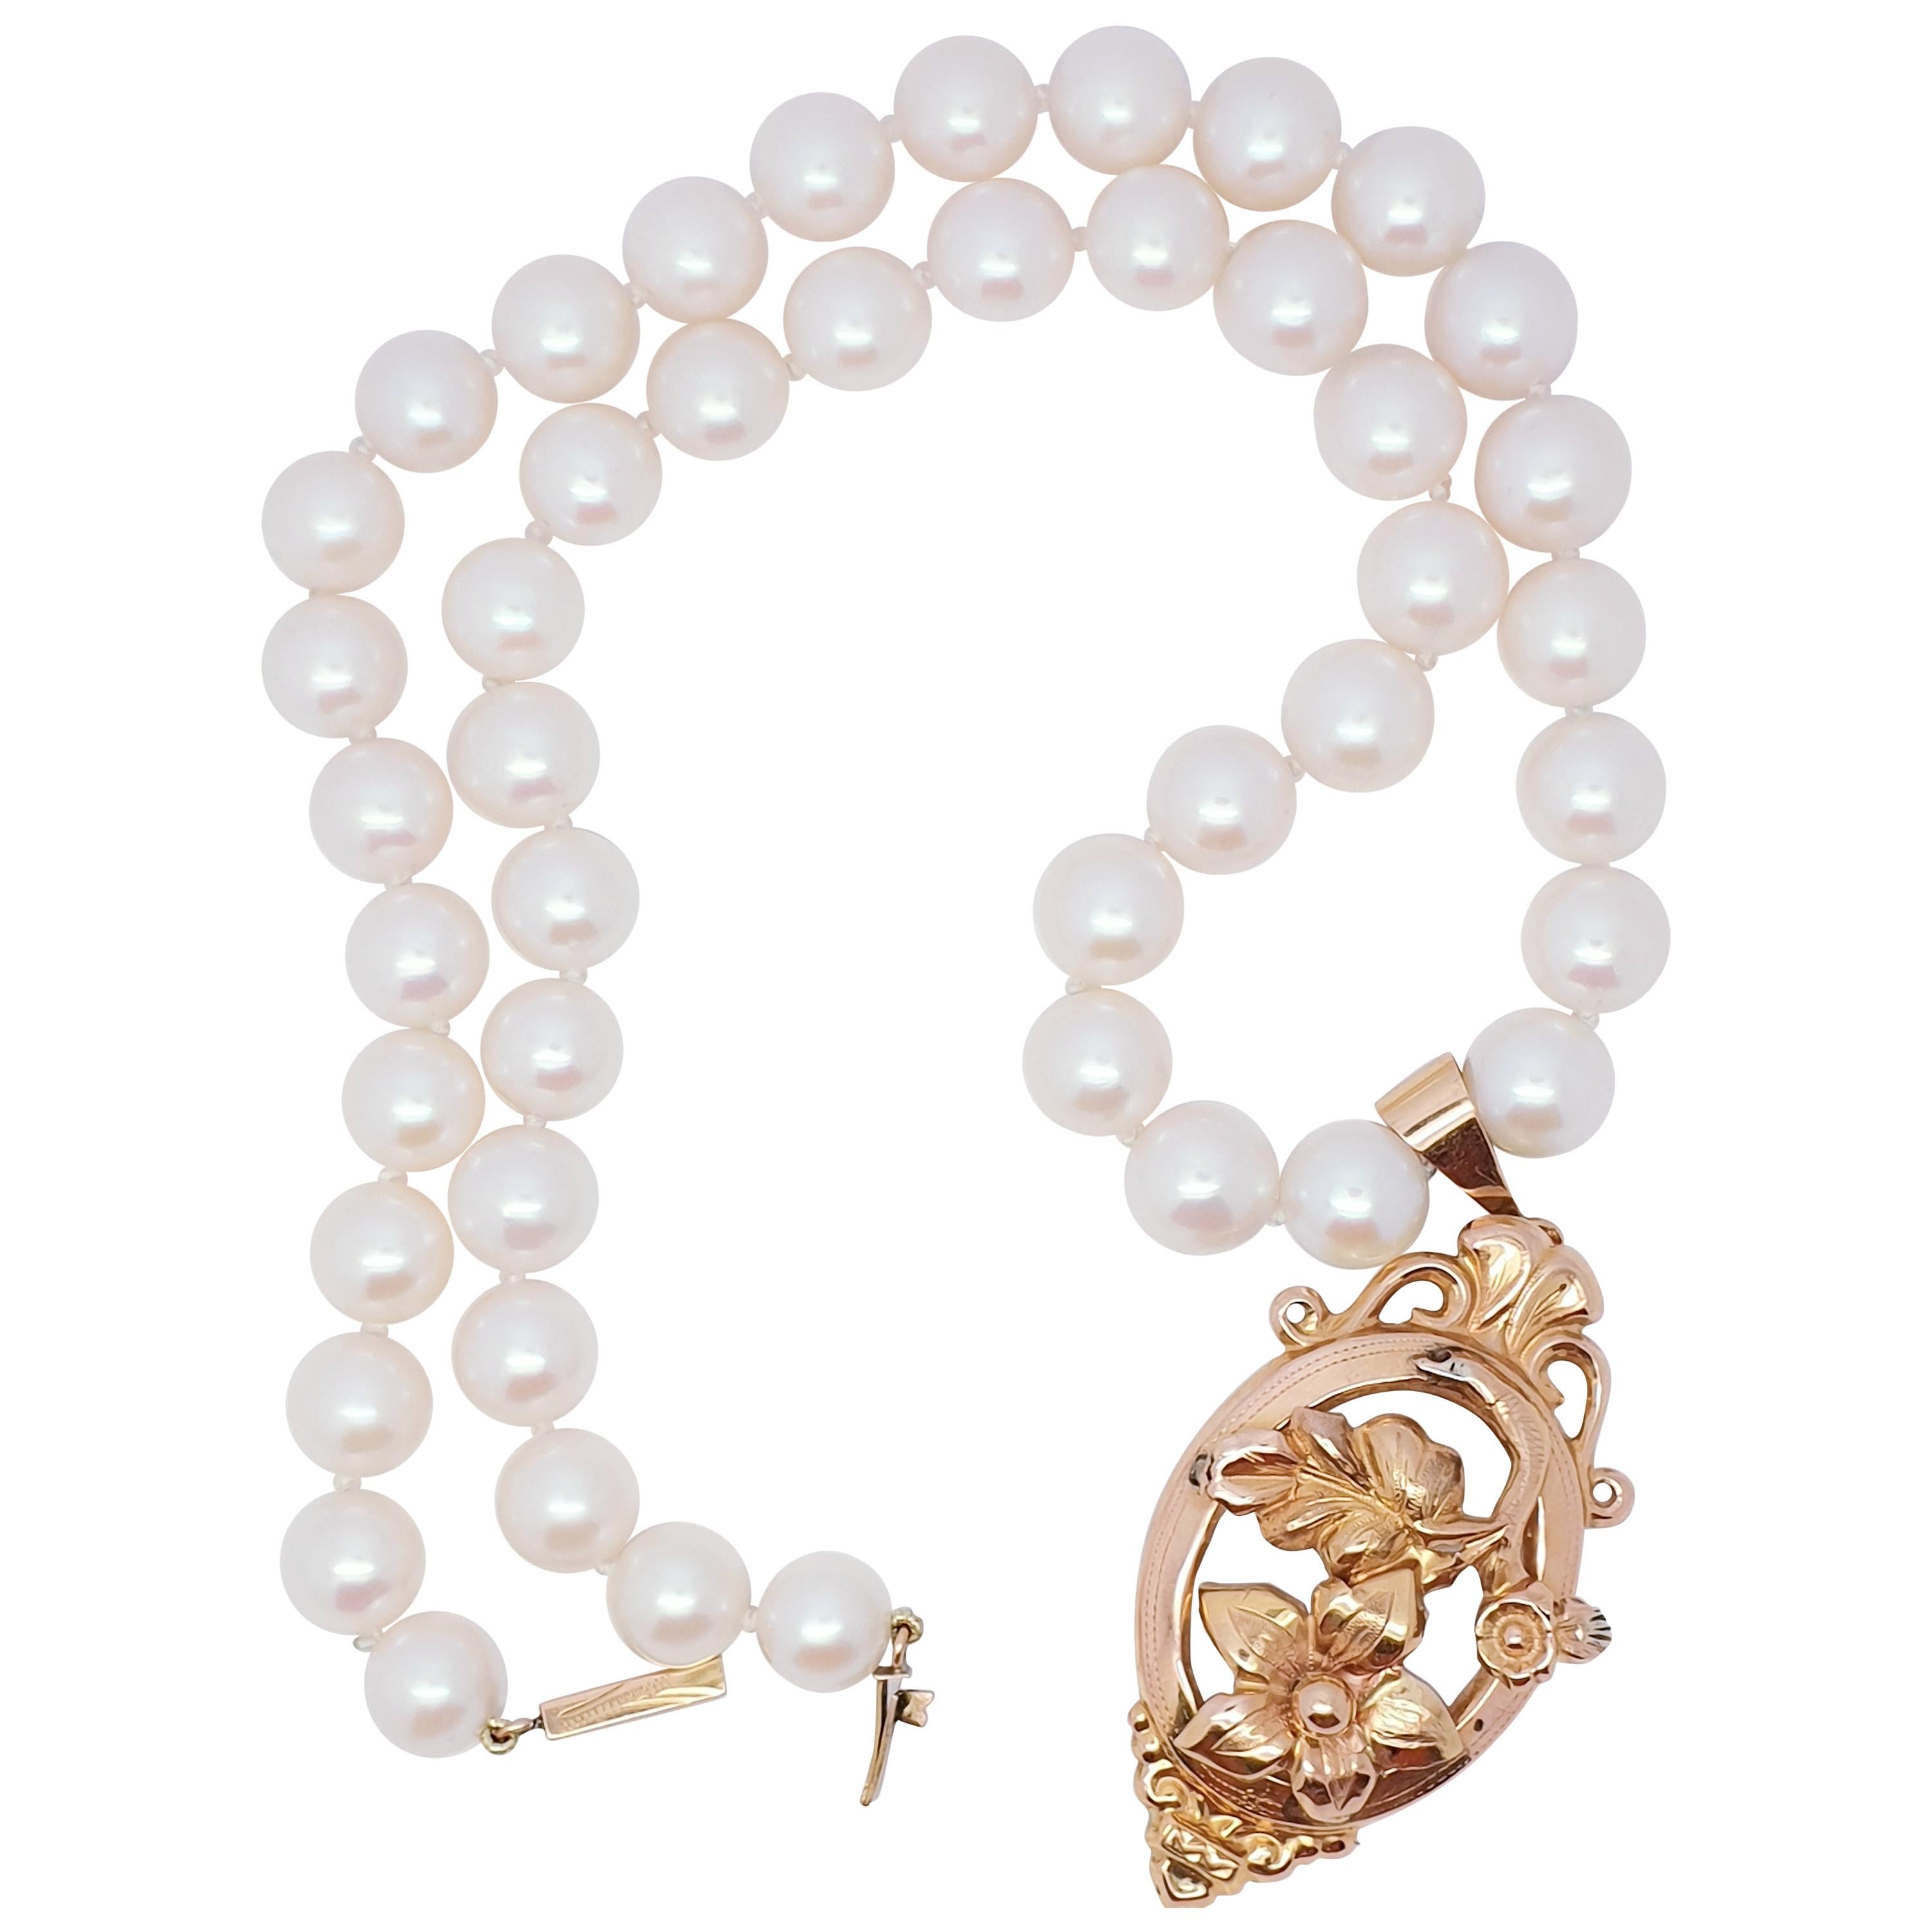 Antique Cultured Pearl Necklace 18 Karat Gold Clasp